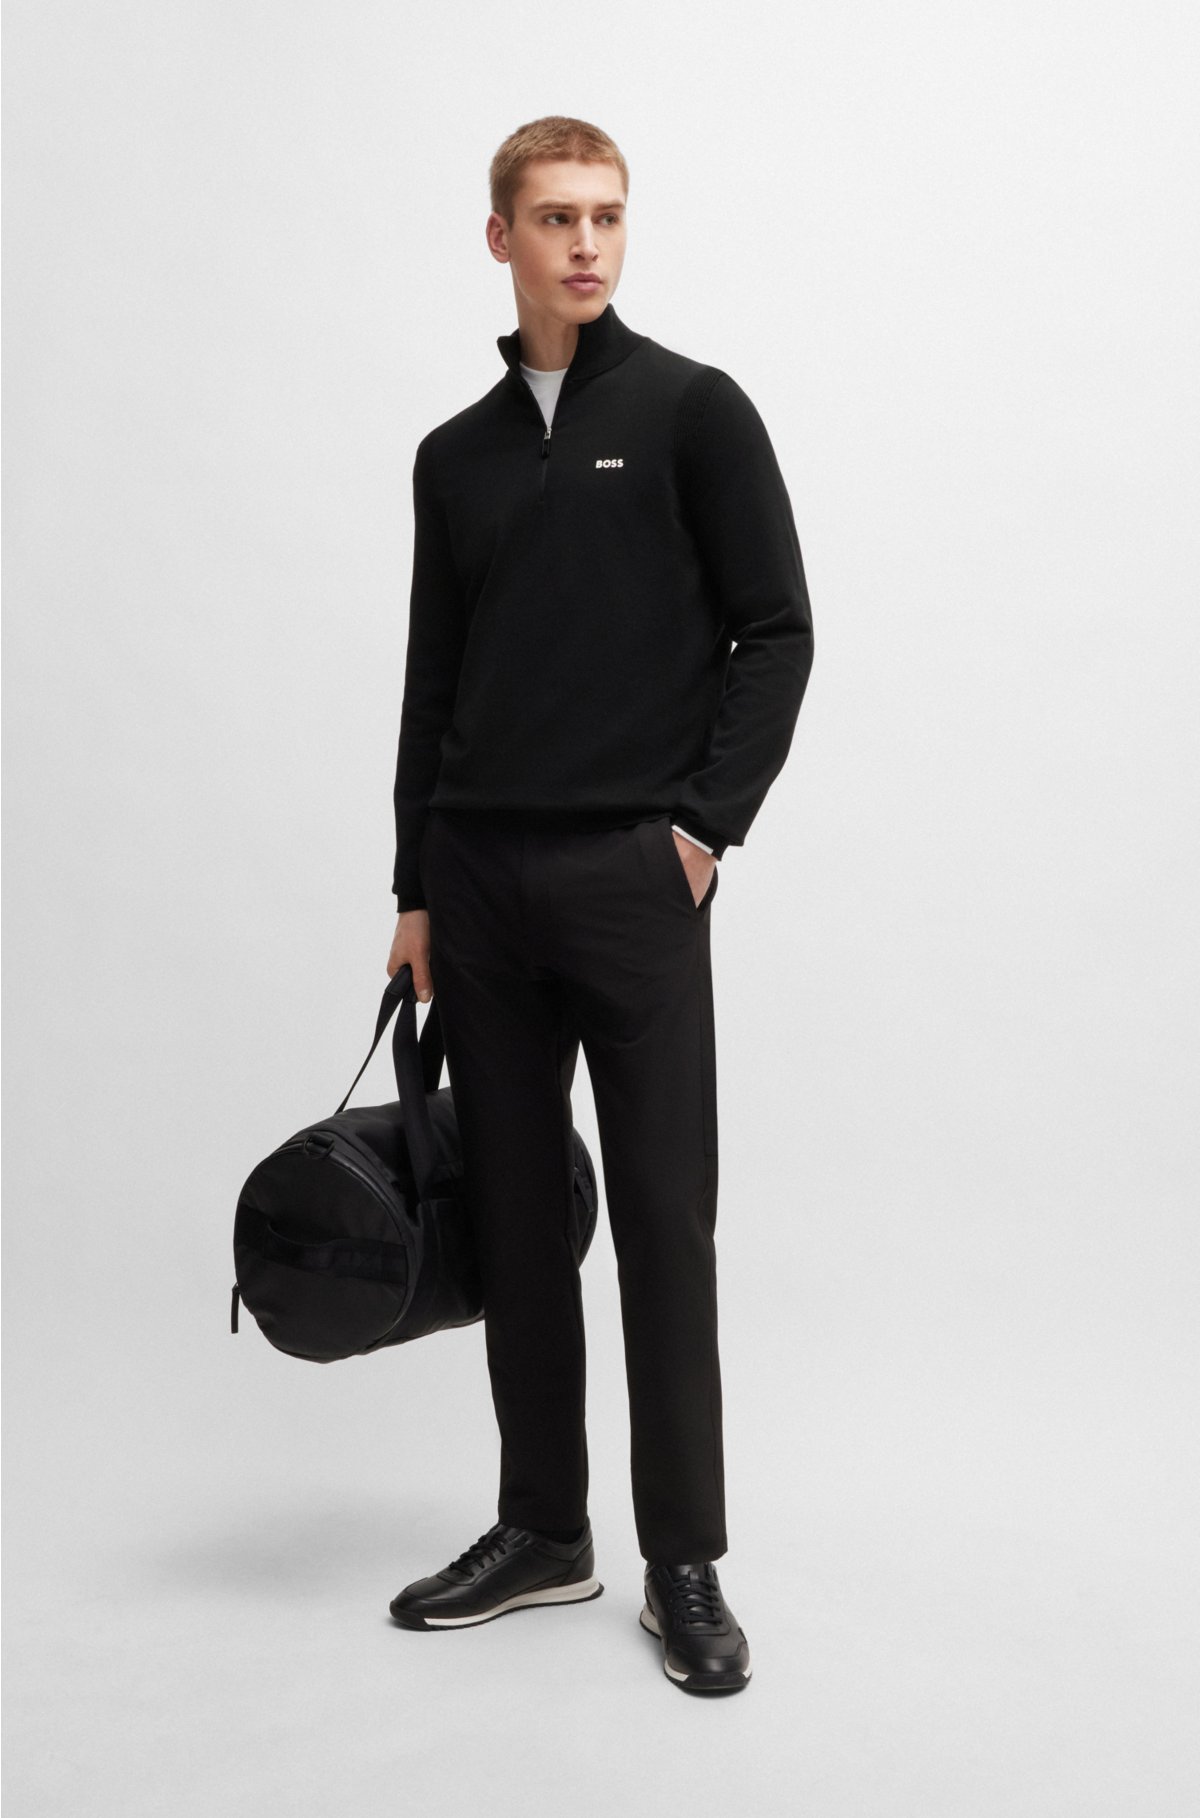 Cotton-blend zip-neck sweater with logo print, Black